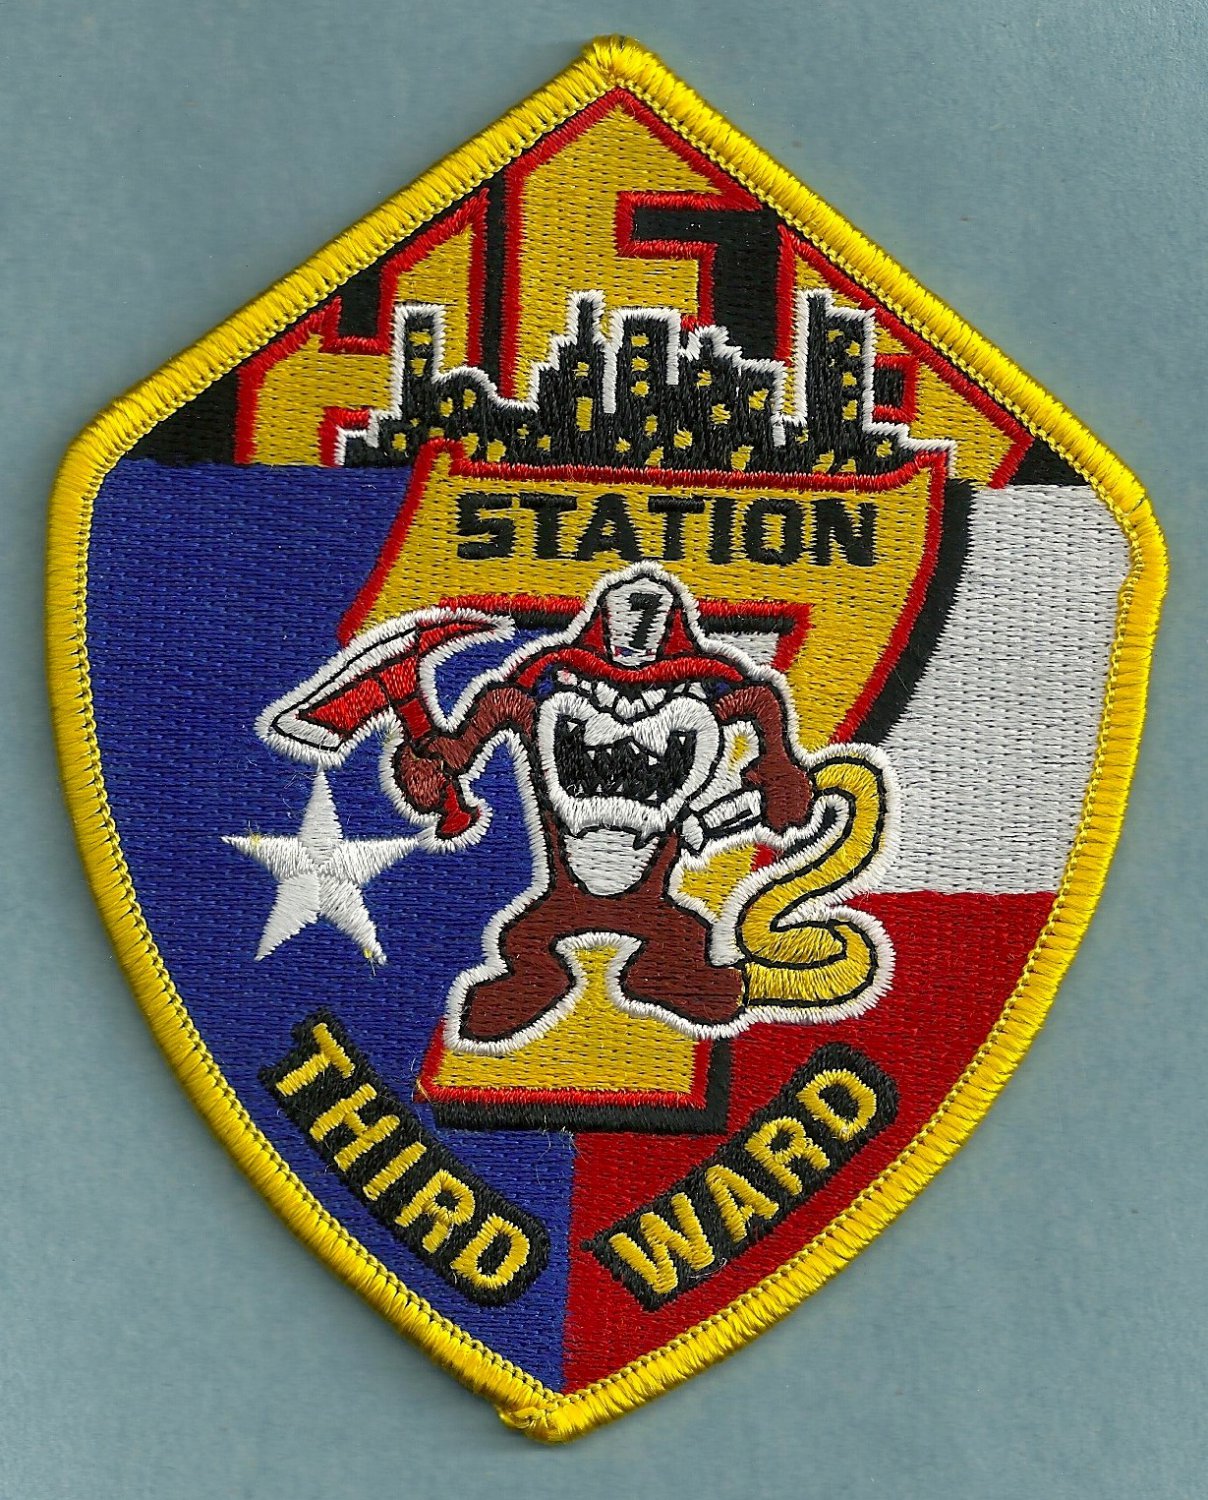 Texas Dragon Houston Station 10 TX Fire Dept Patch 